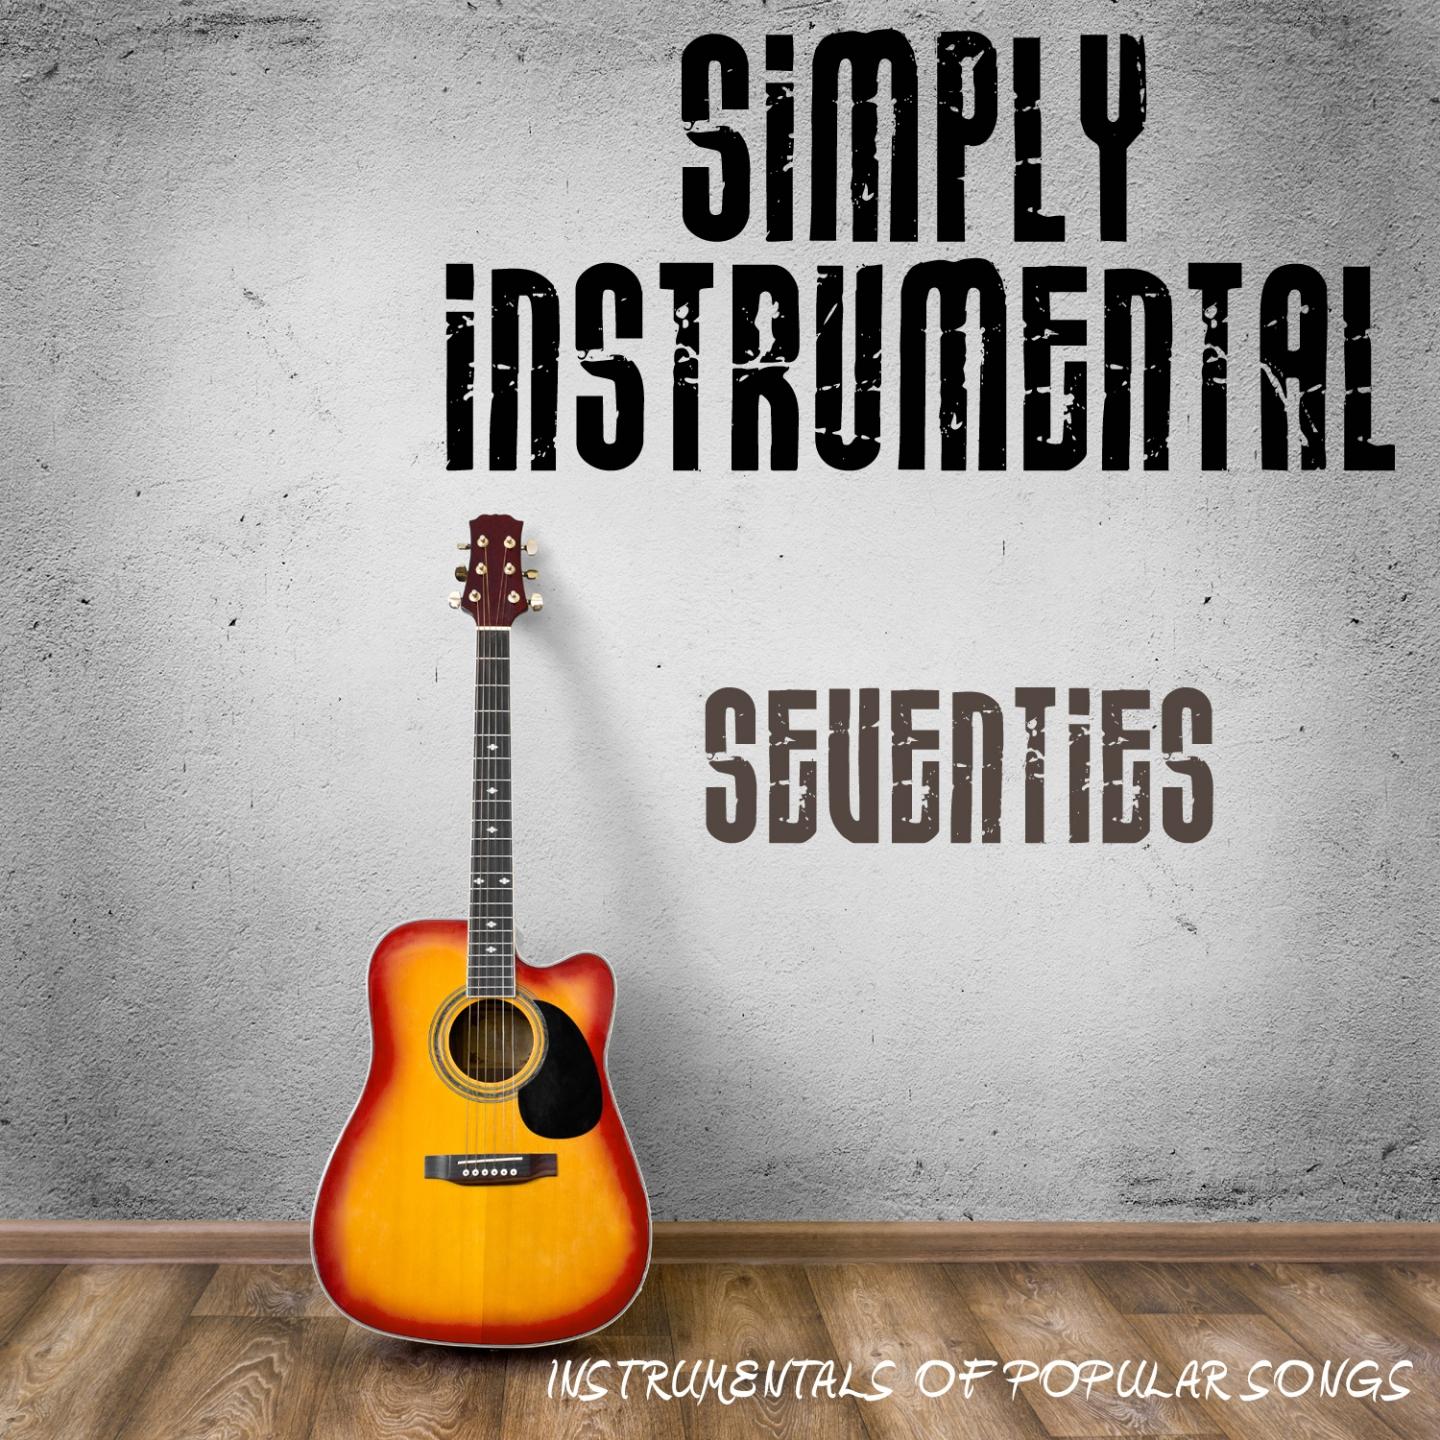 Simply Instrumental 70's